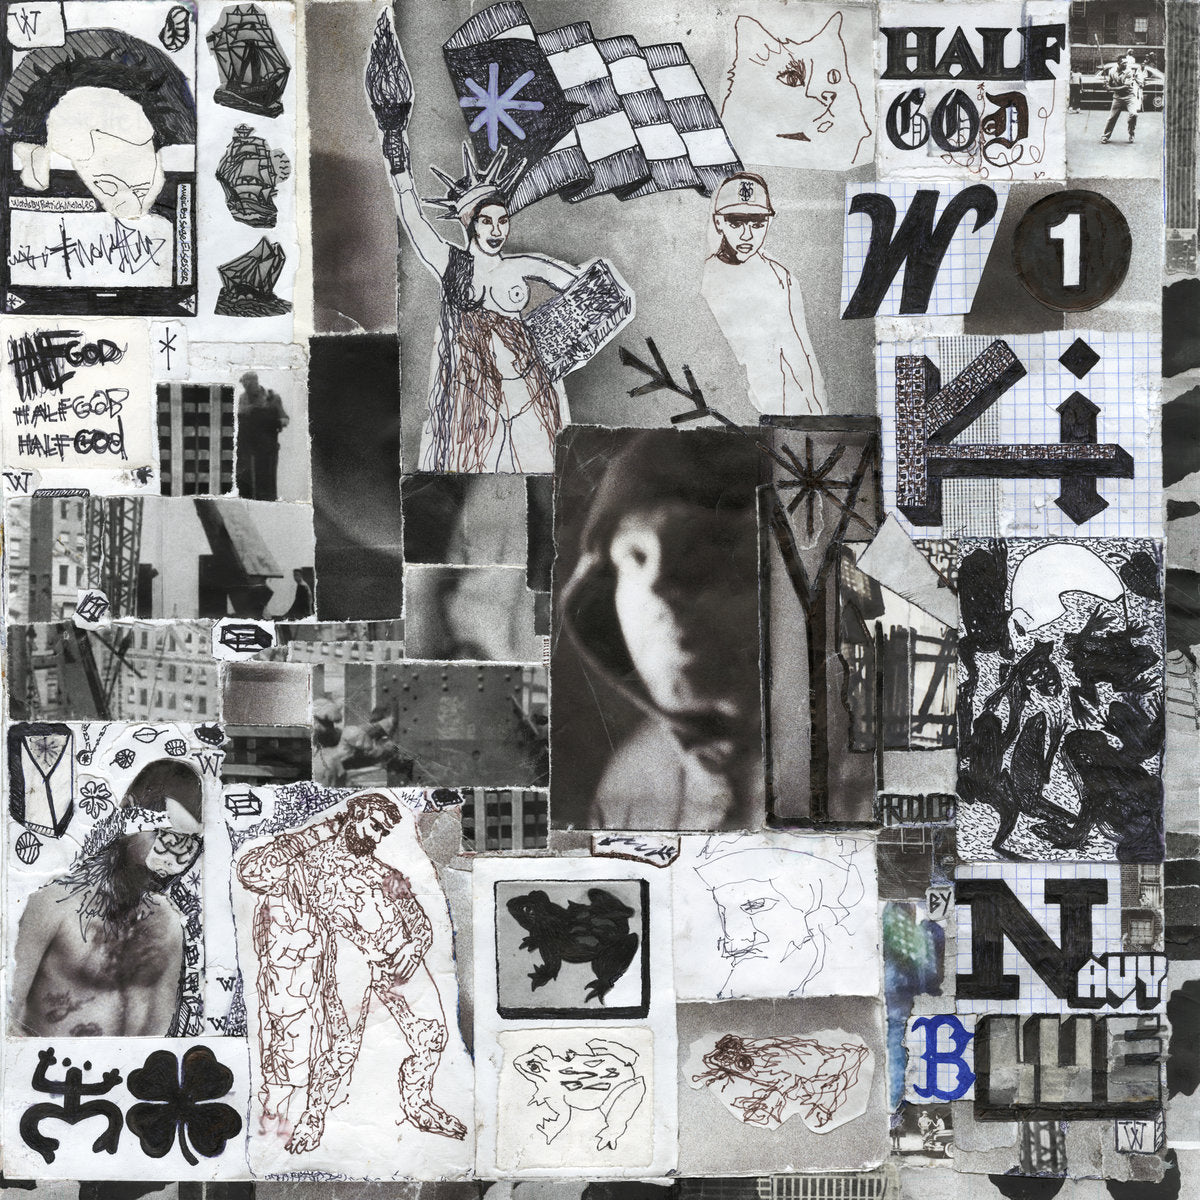 WIKI - HALF GOD Vinyl 2xLP